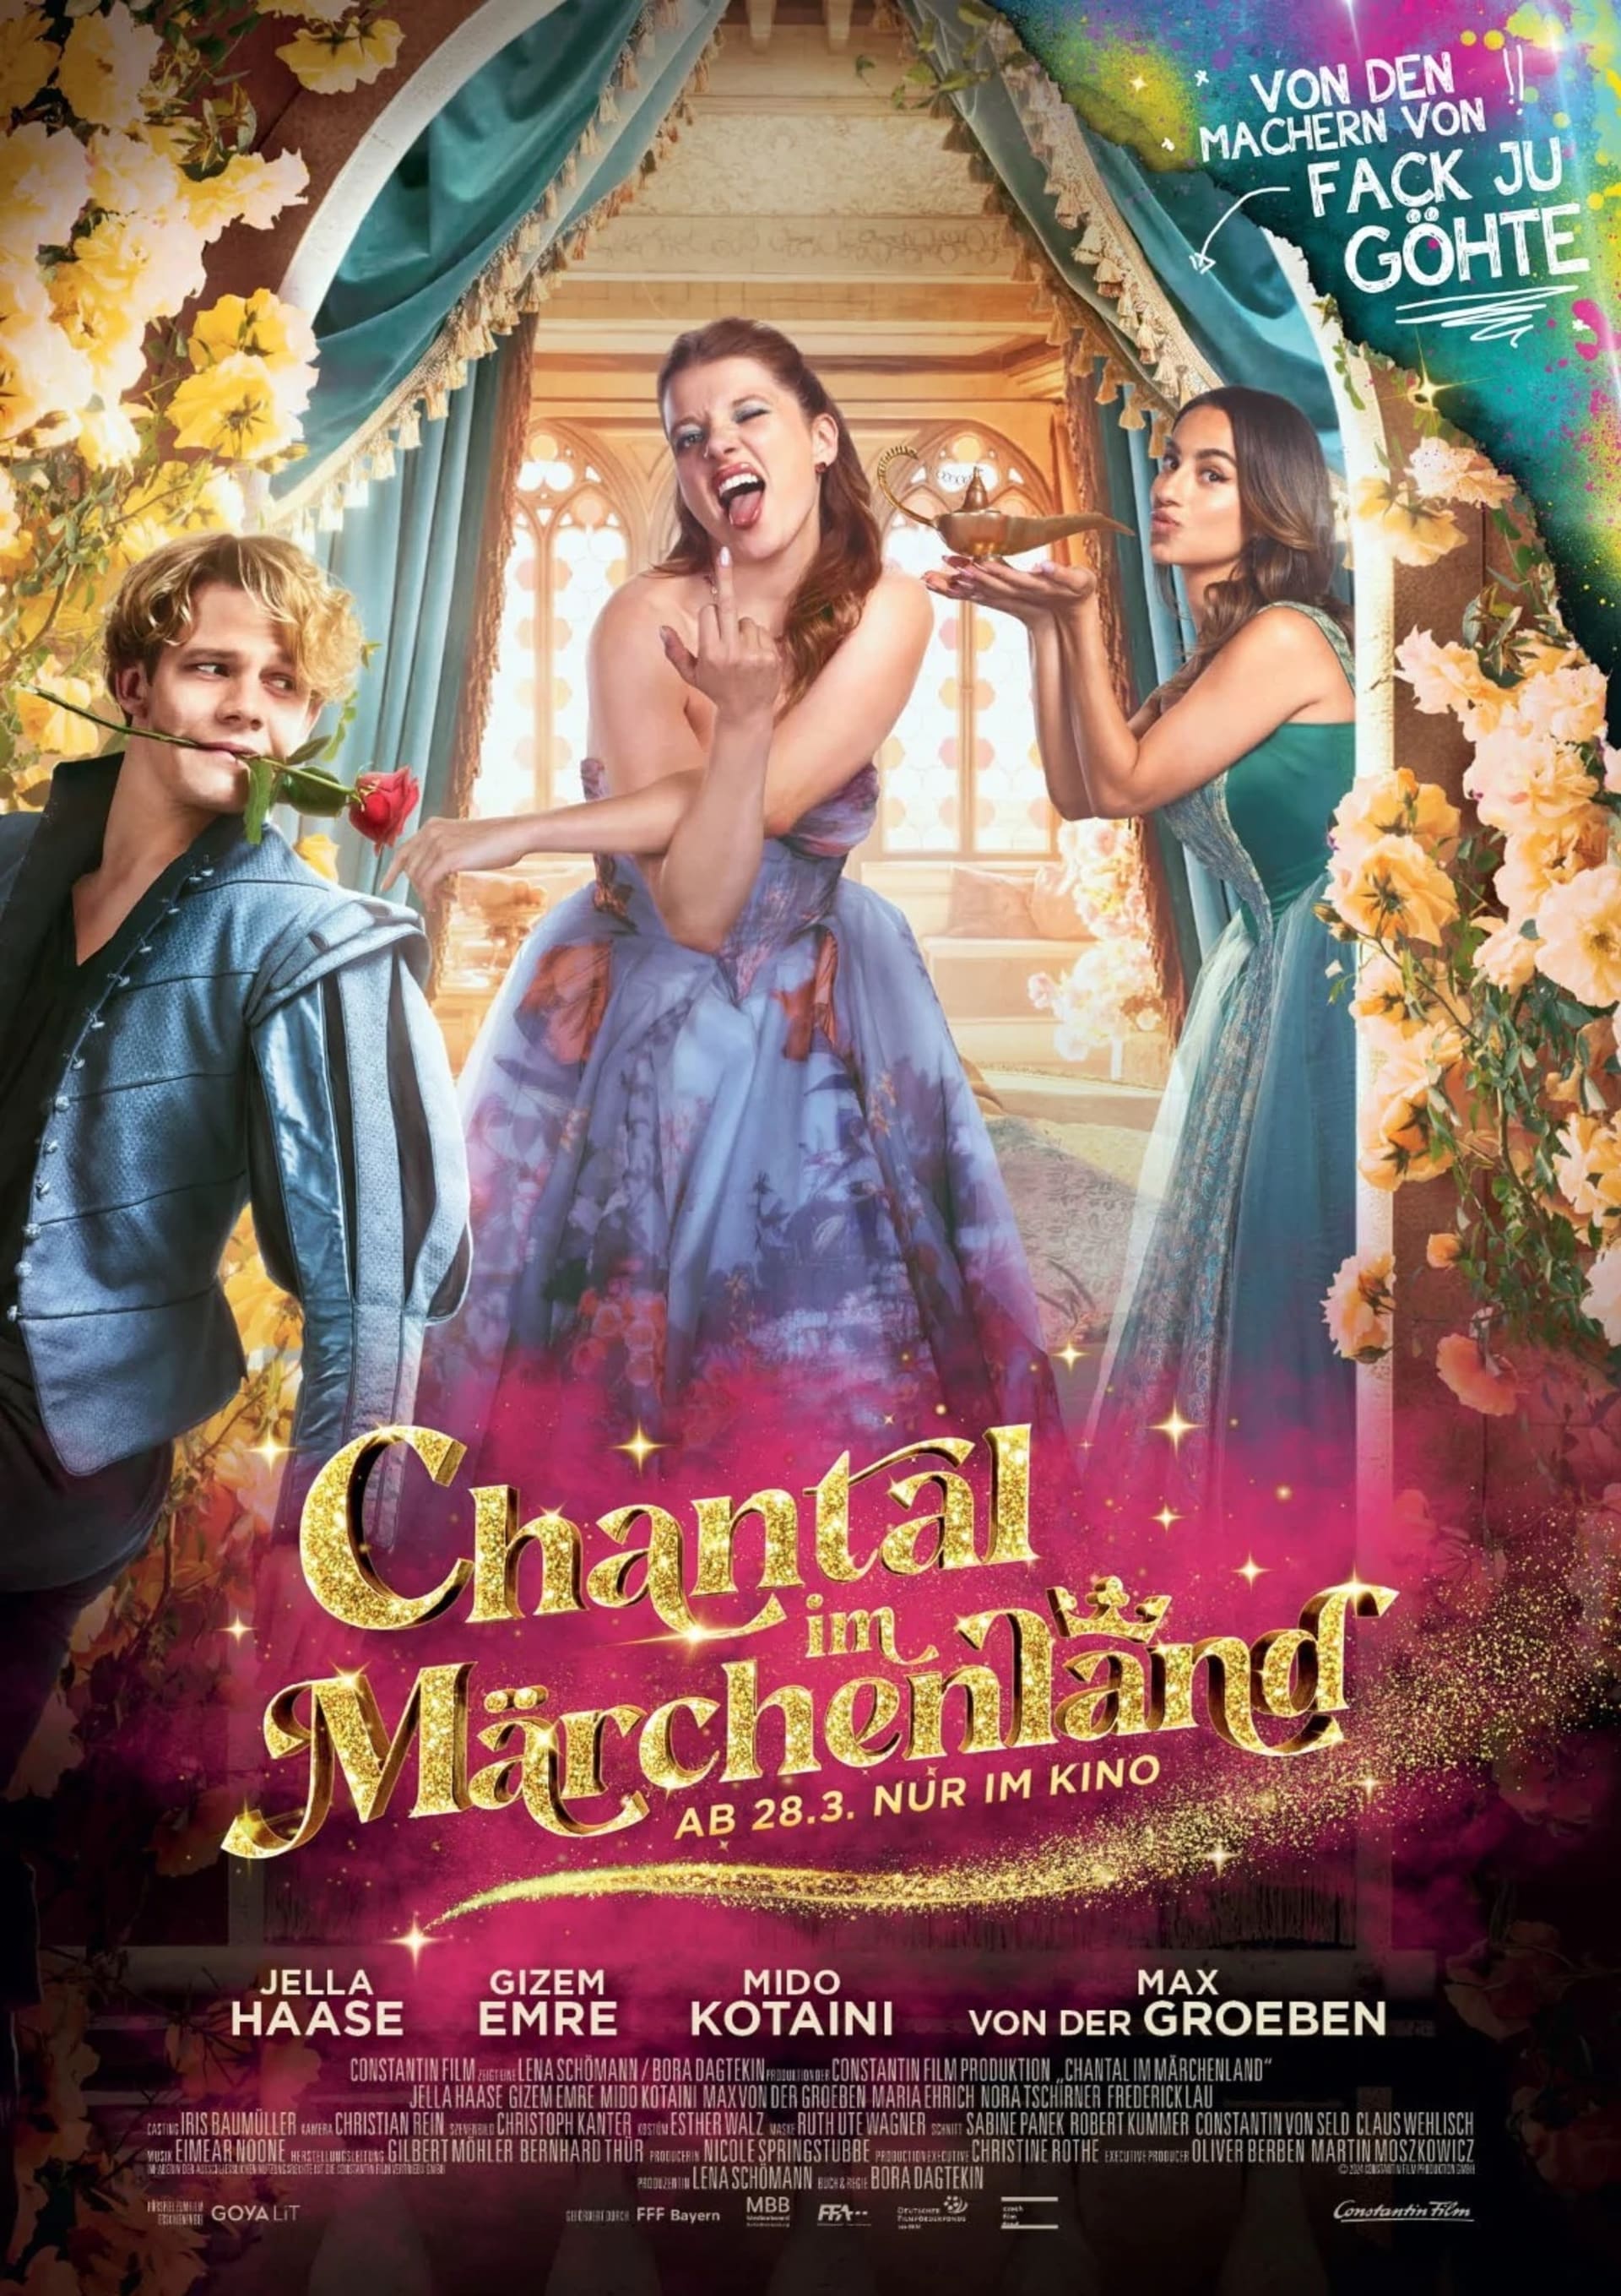 Chantal im Märchenland - spin-off série Fakjů pane učiteli